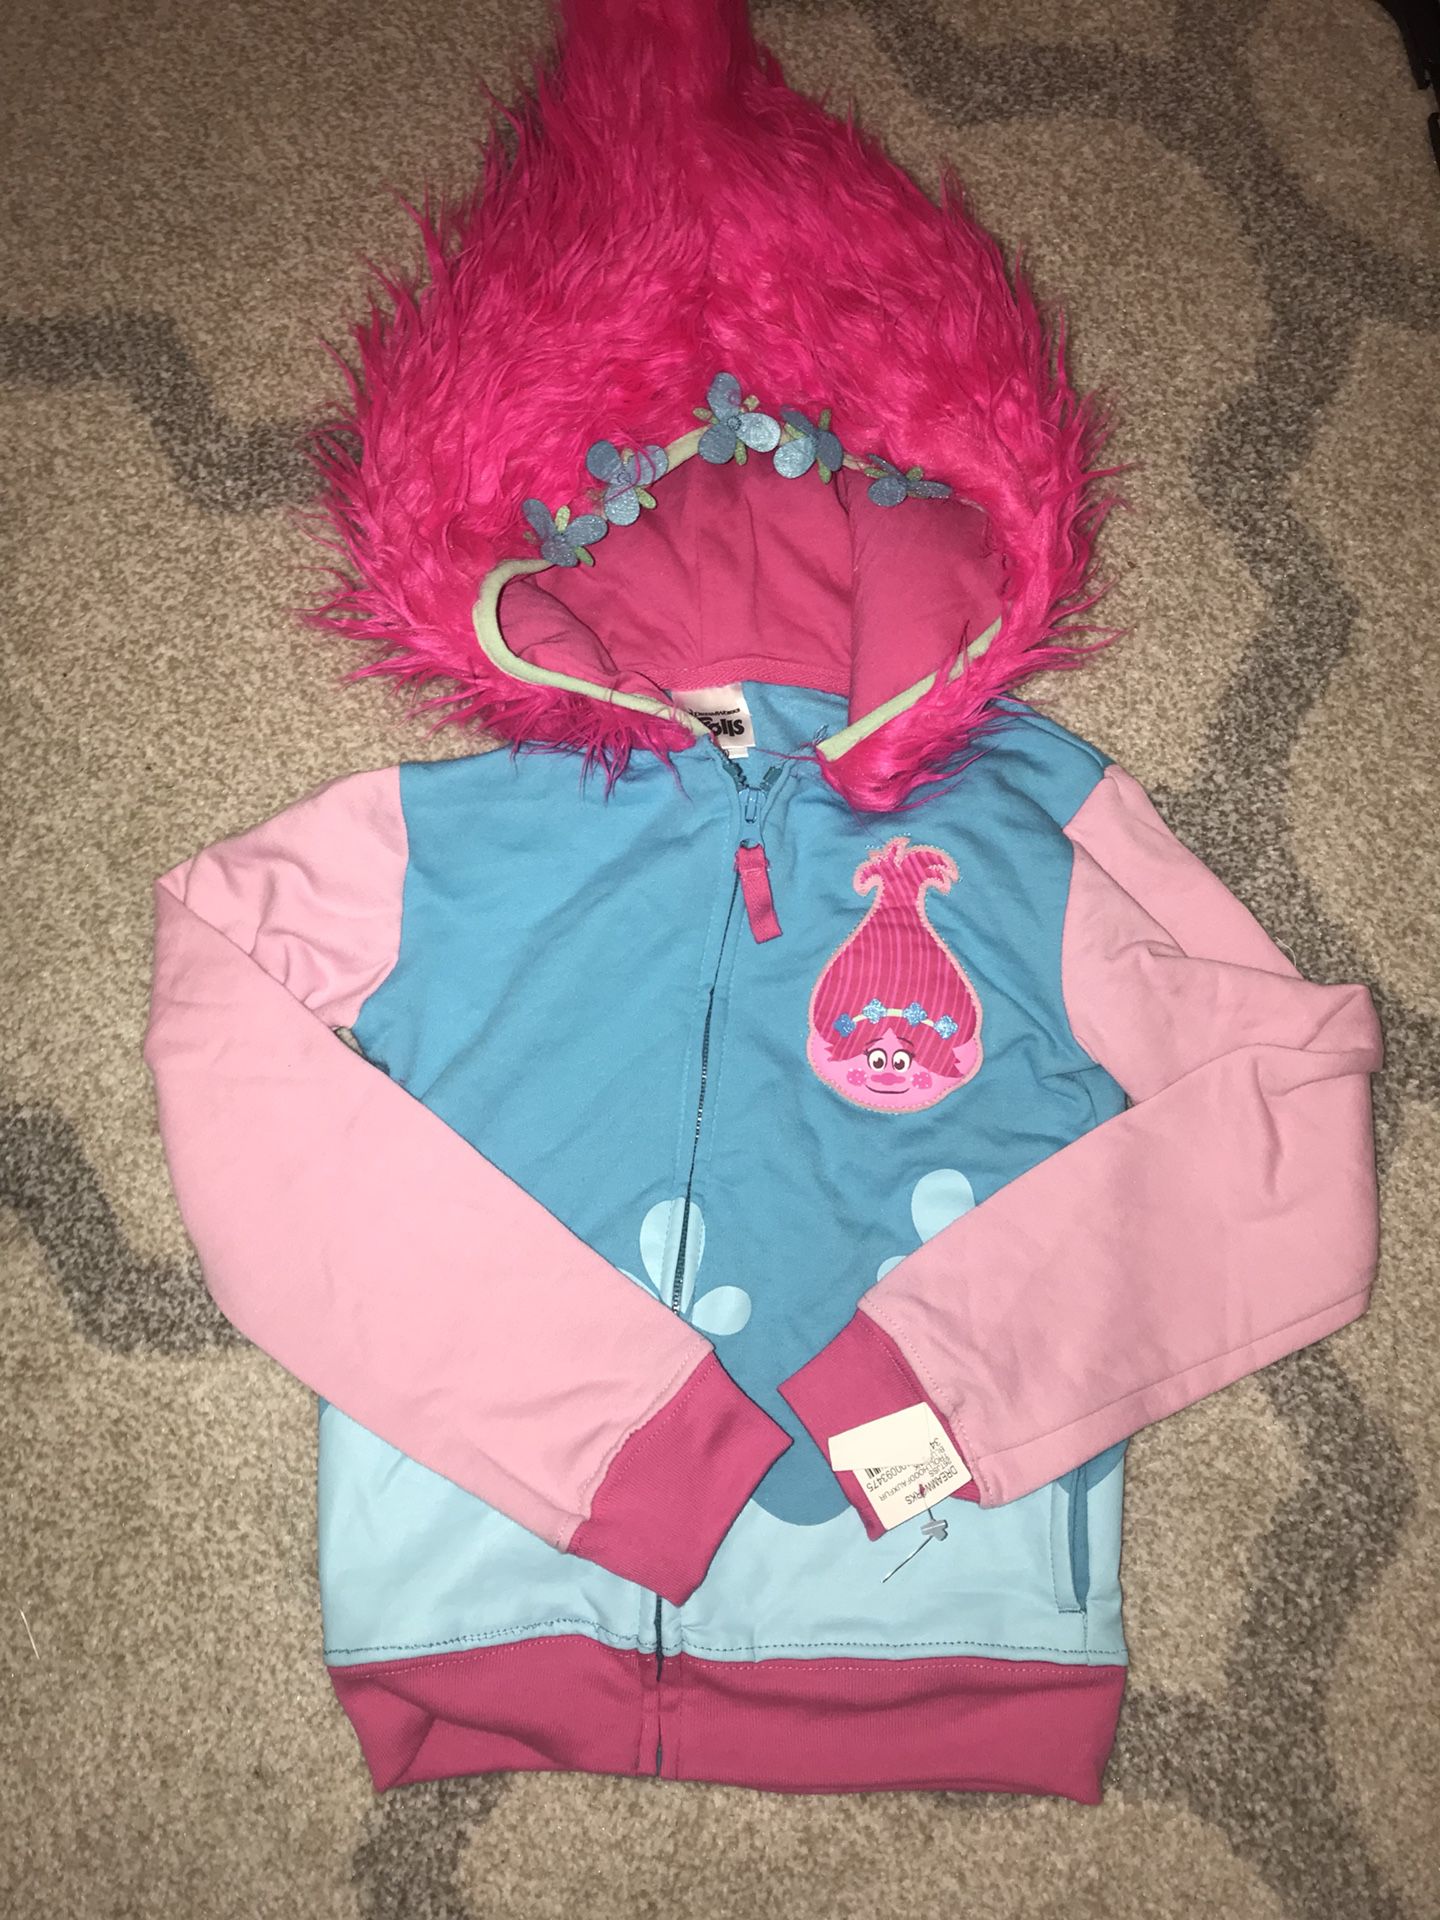 Girls Trolls sweatshirt hoodie size 6 pink zipper new with tags